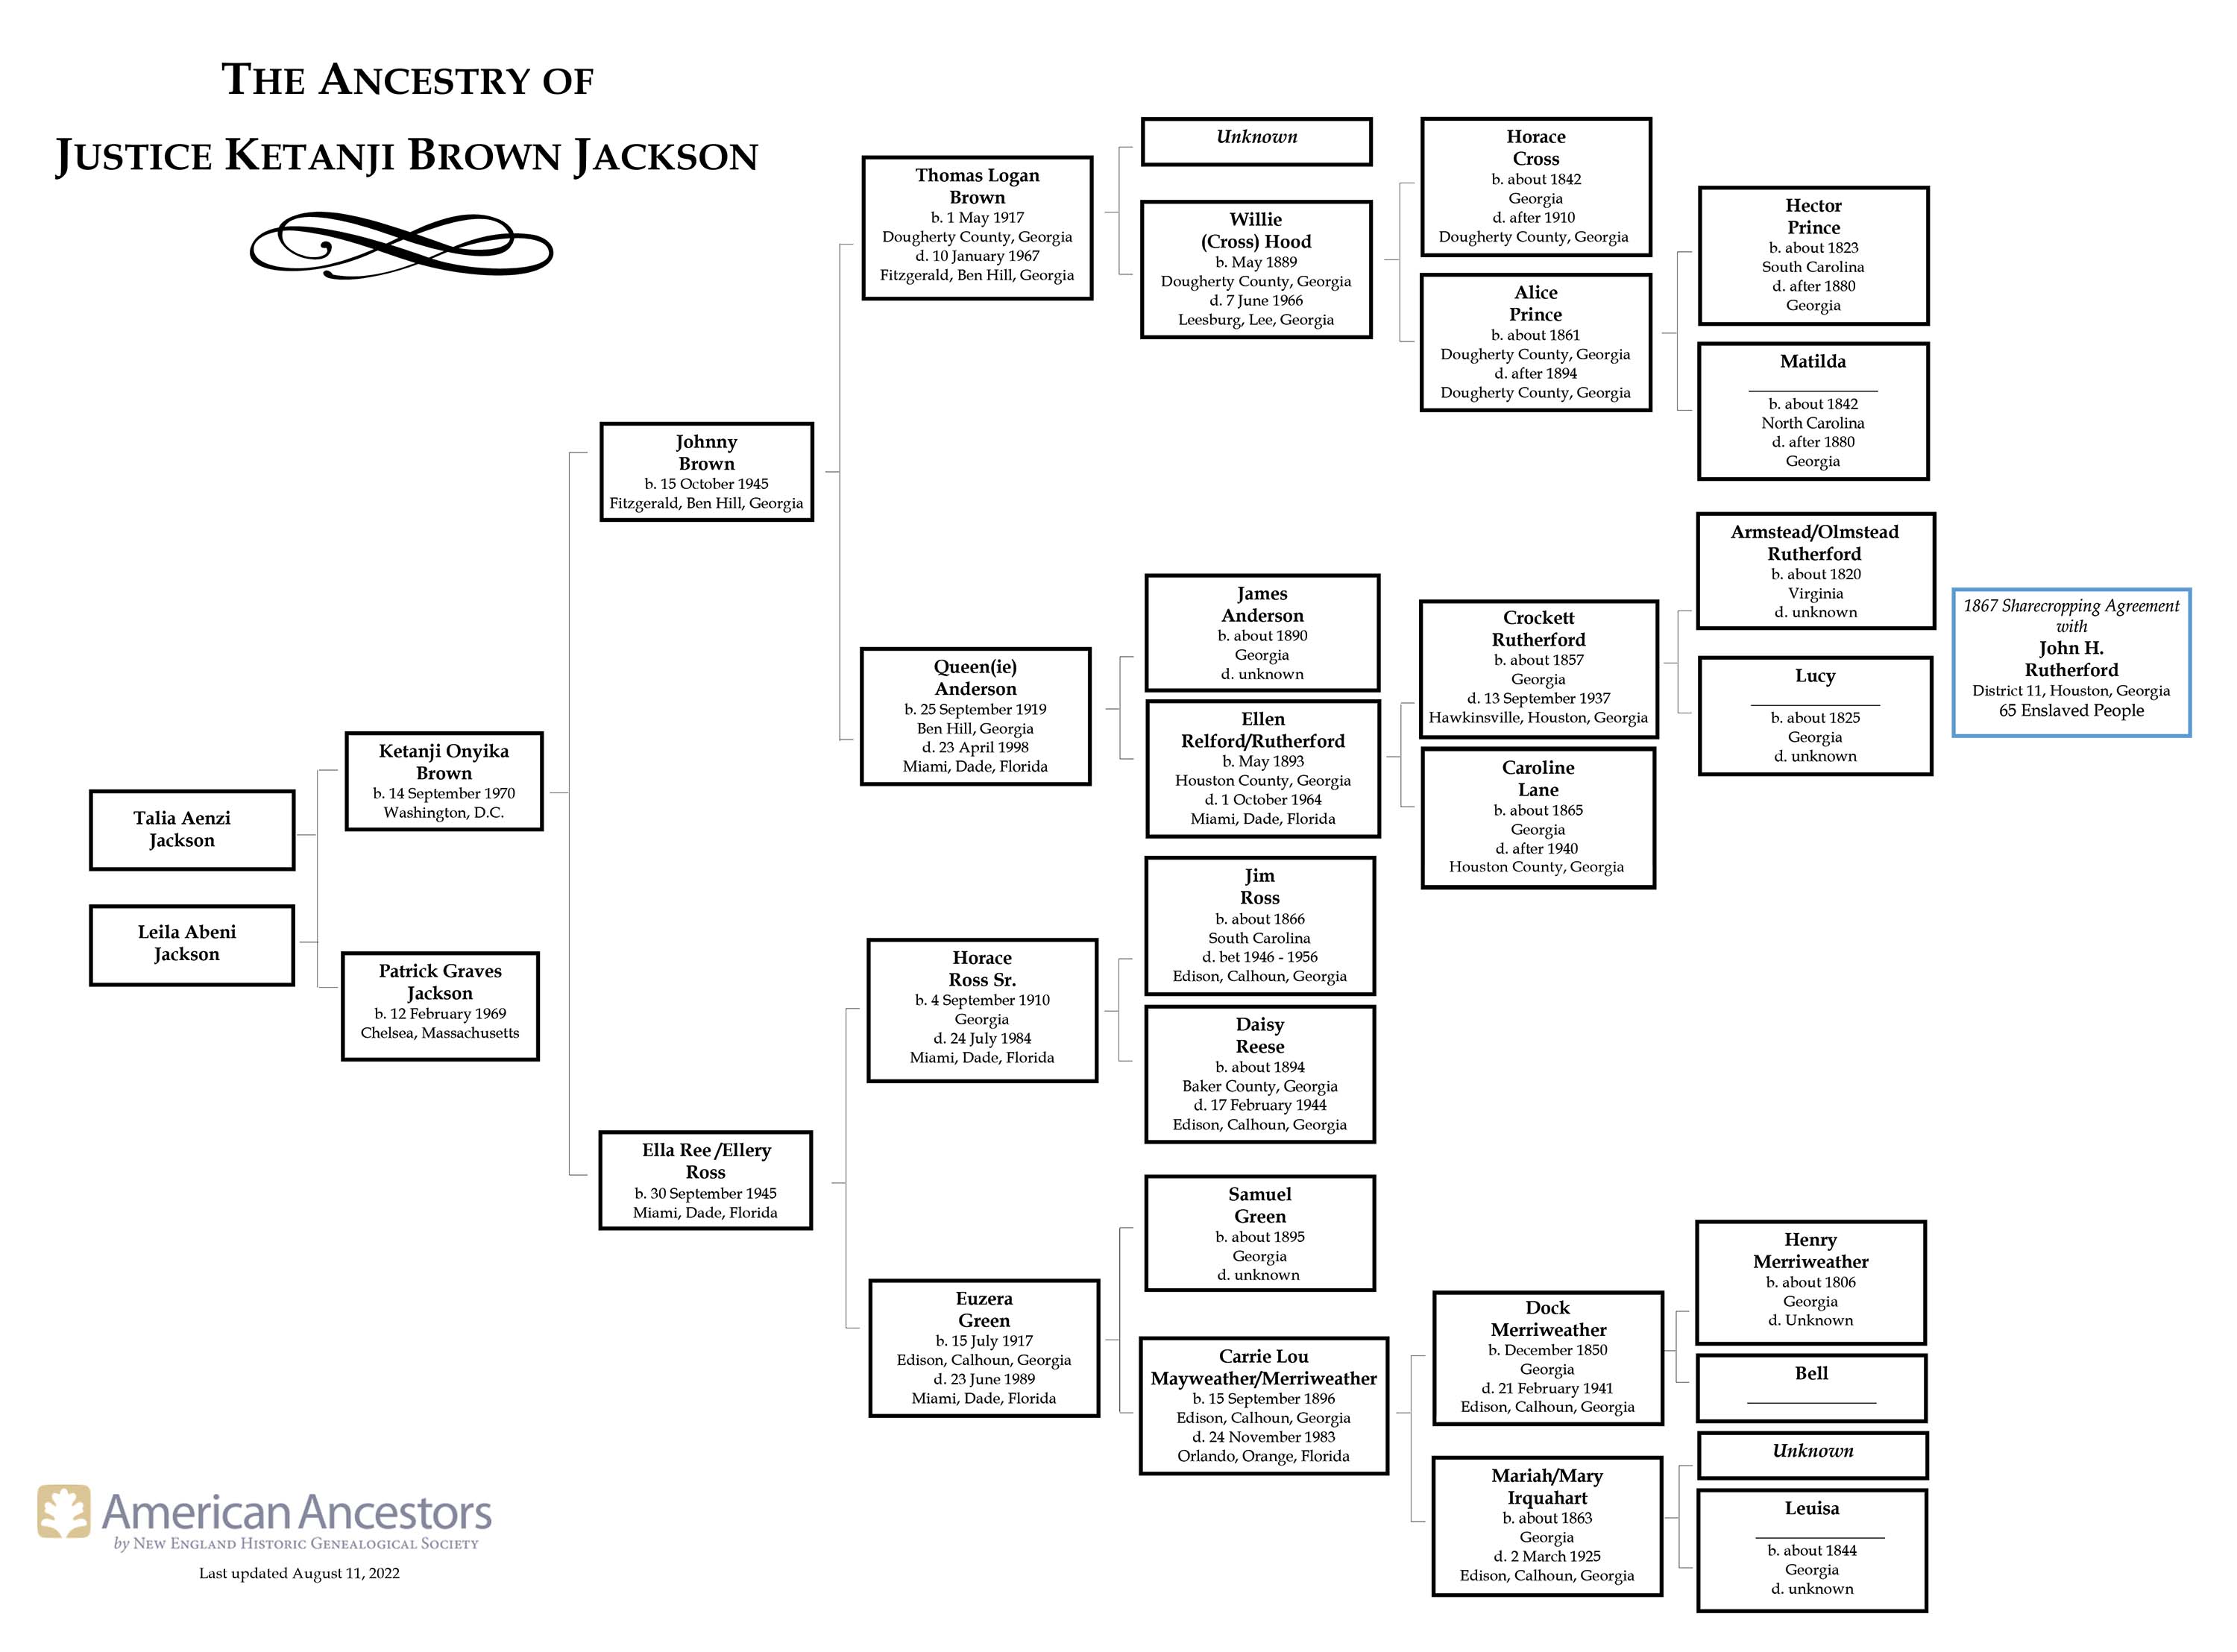 Ancestry chart for Justice Ketanji Brown Jackson